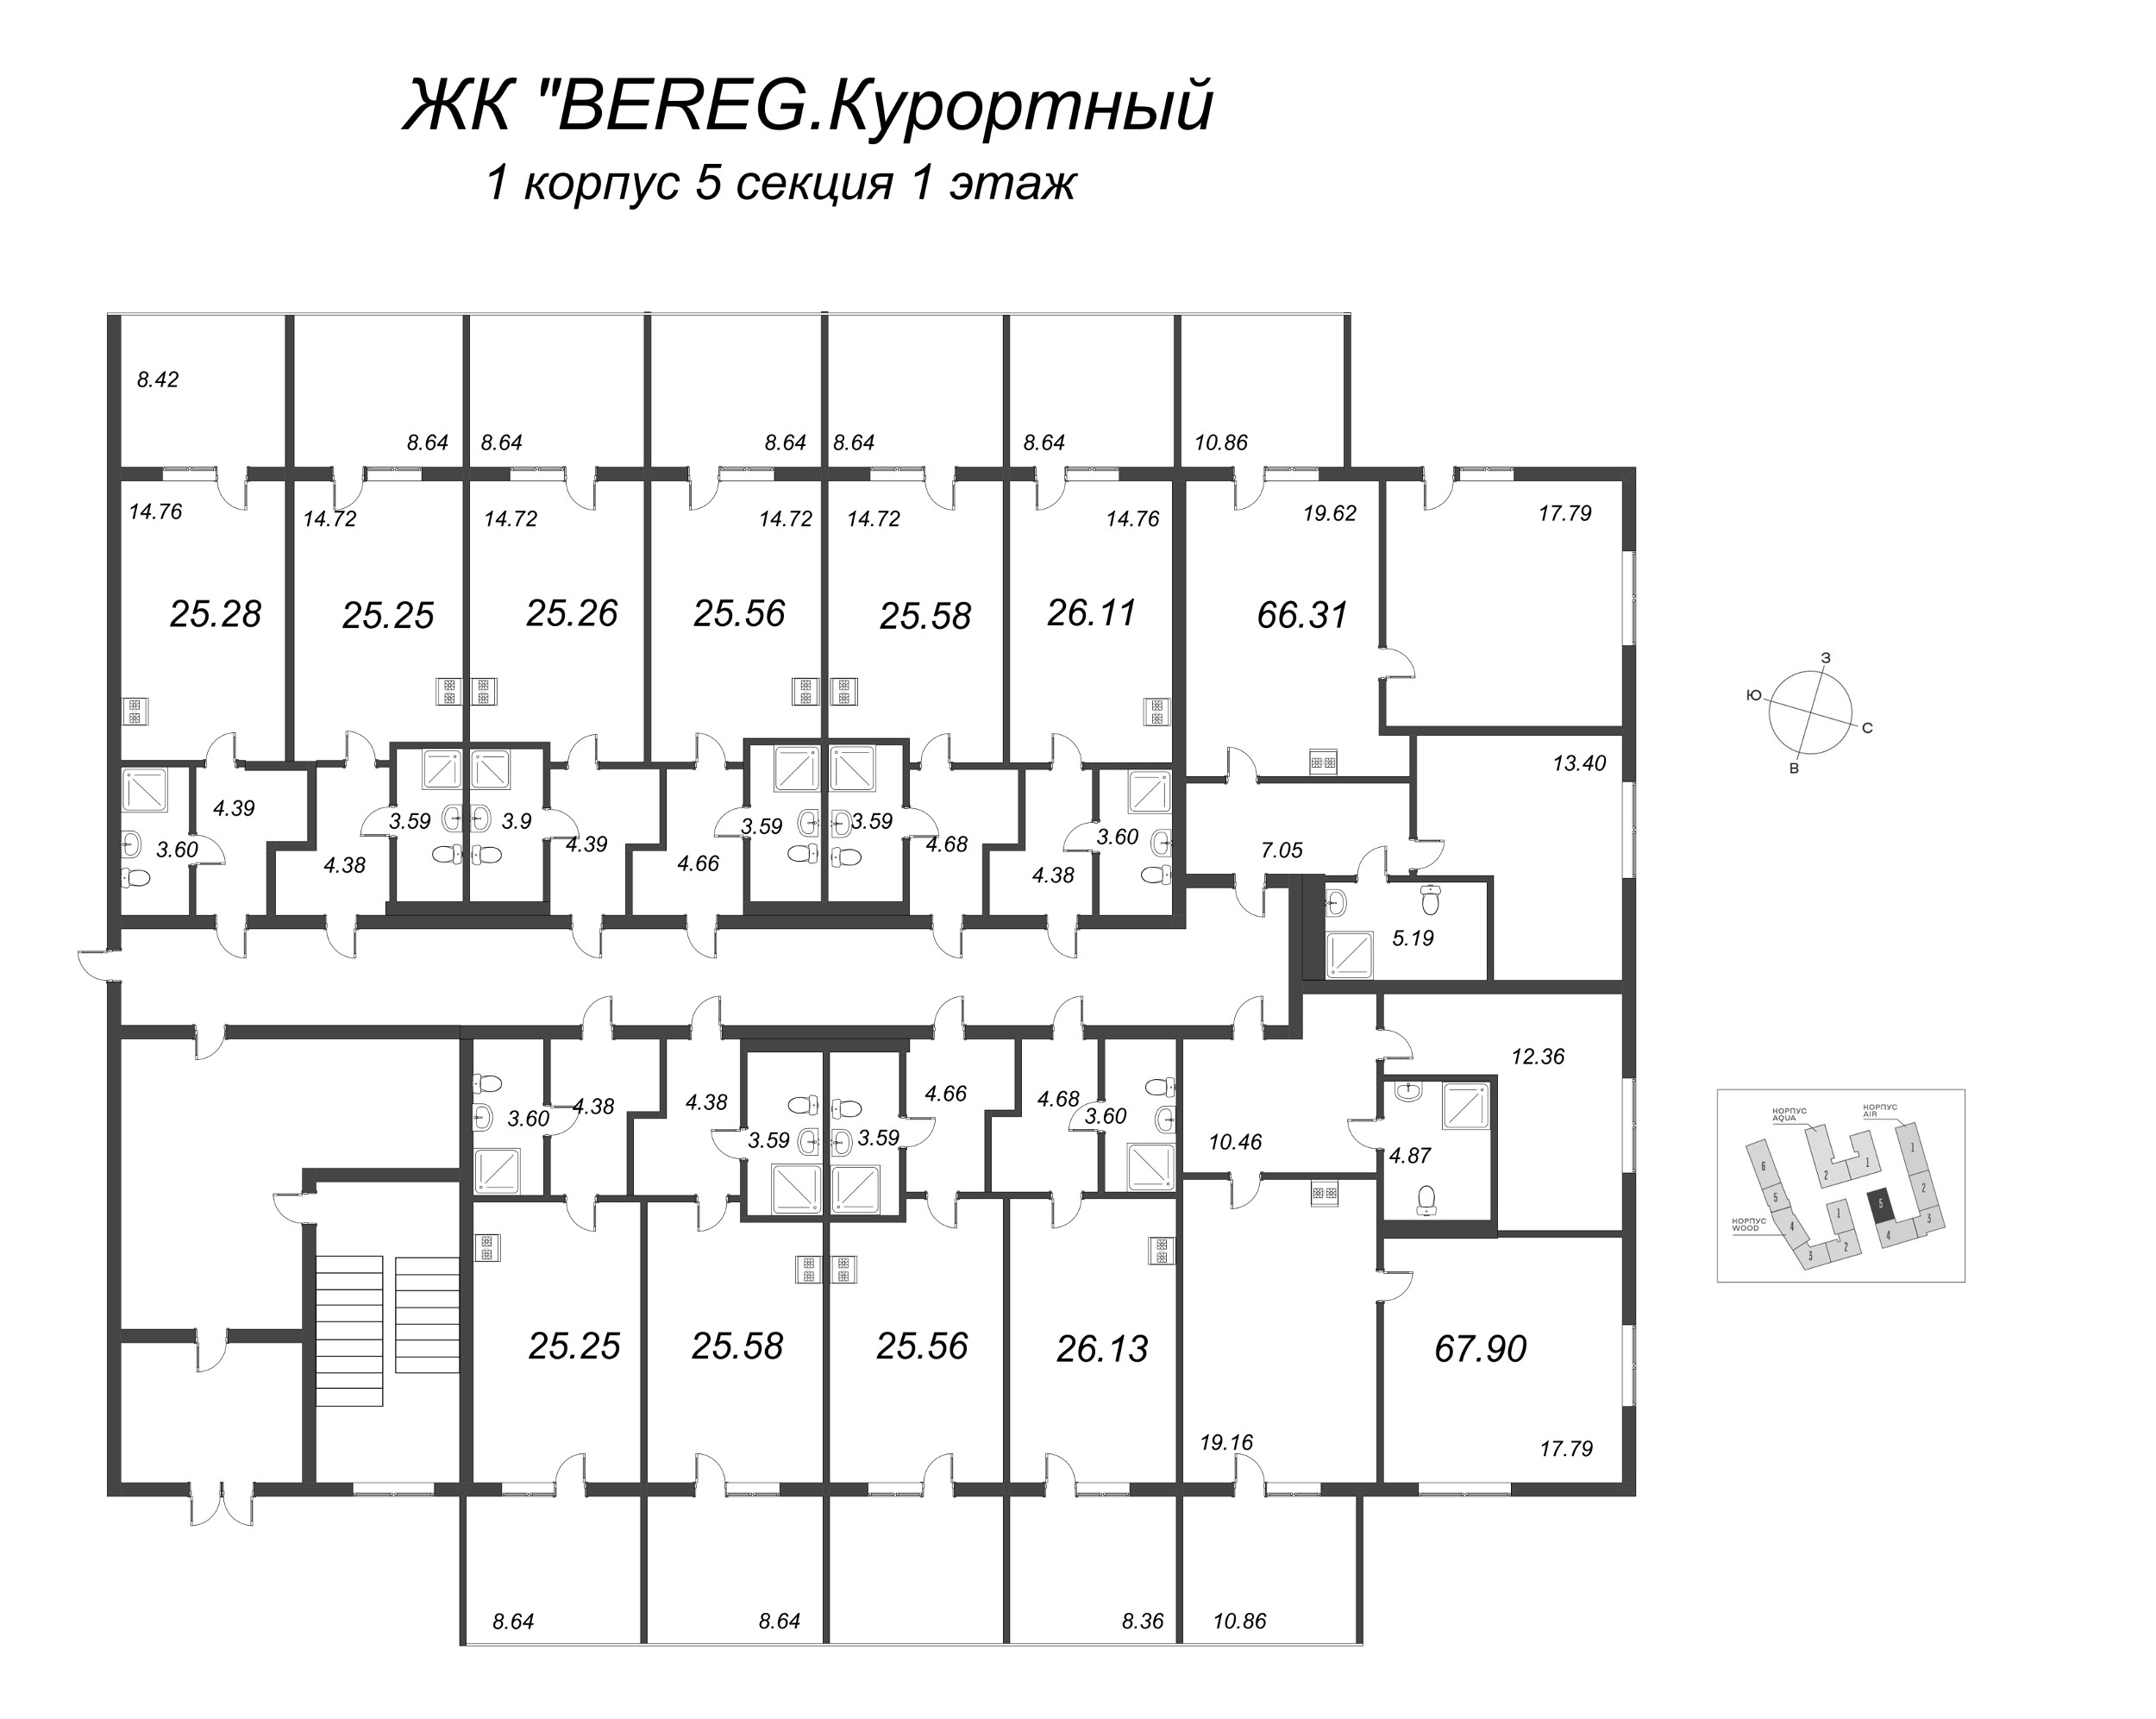 3-комнатная (Евро) квартира, 66.31 м² - планировка этажа